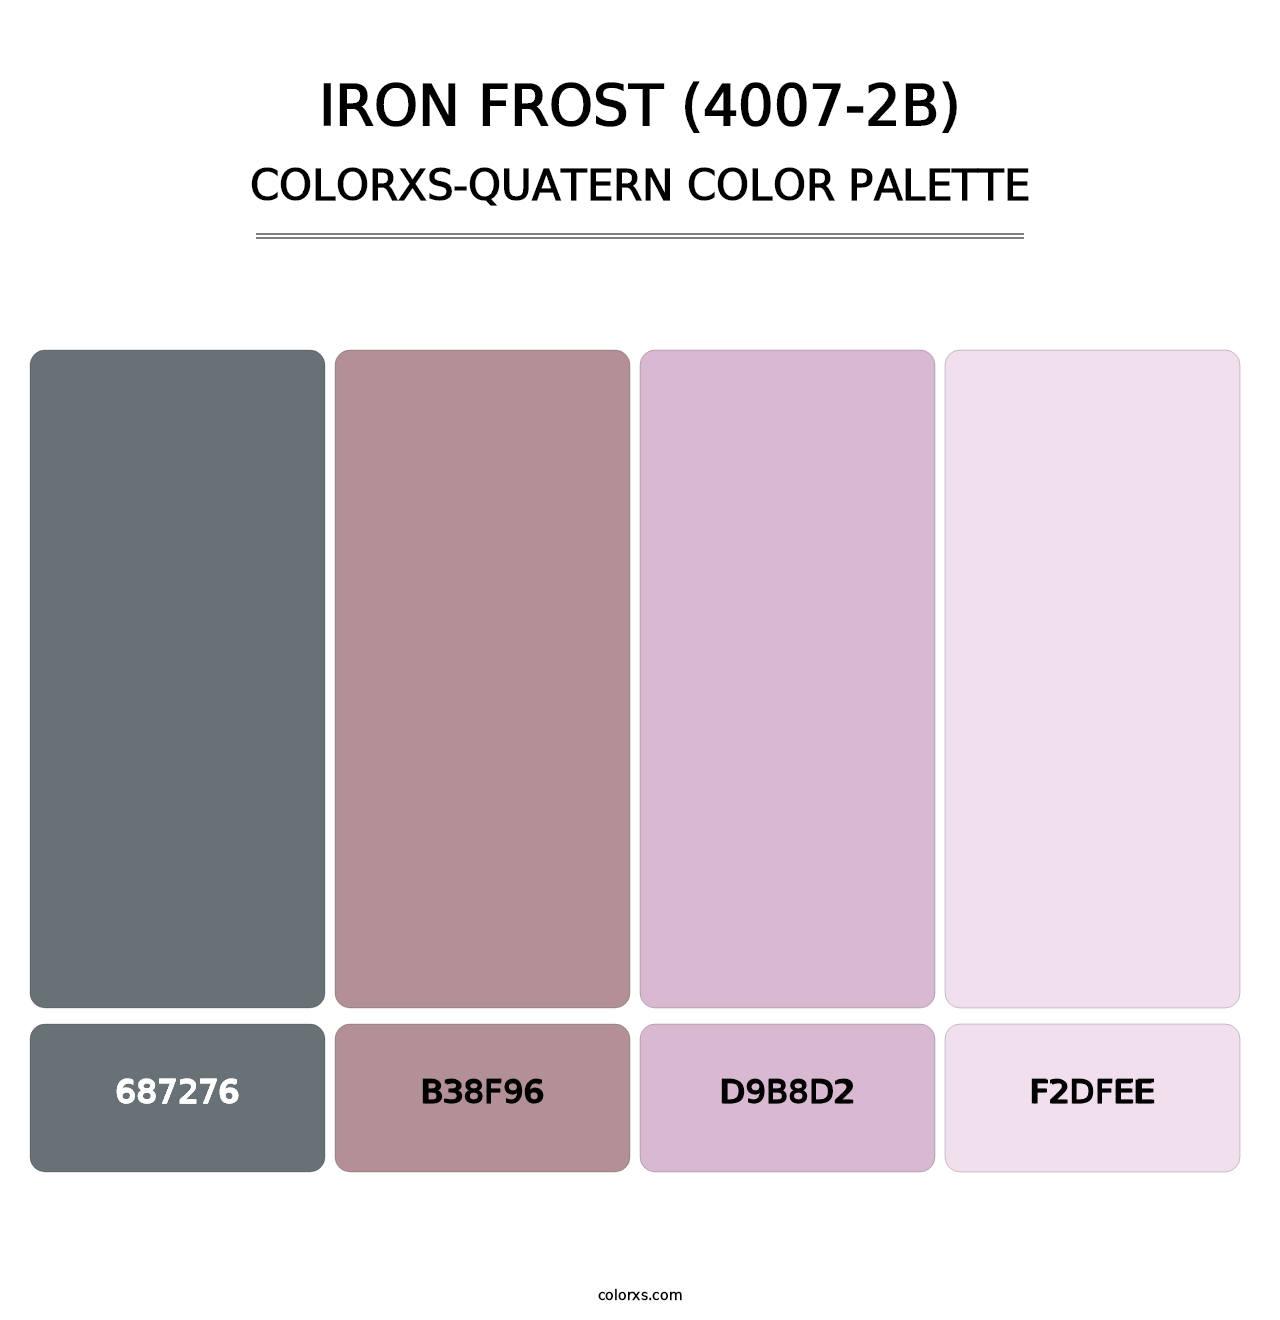 Iron Frost (4007-2B) - Colorxs Quatern Palette